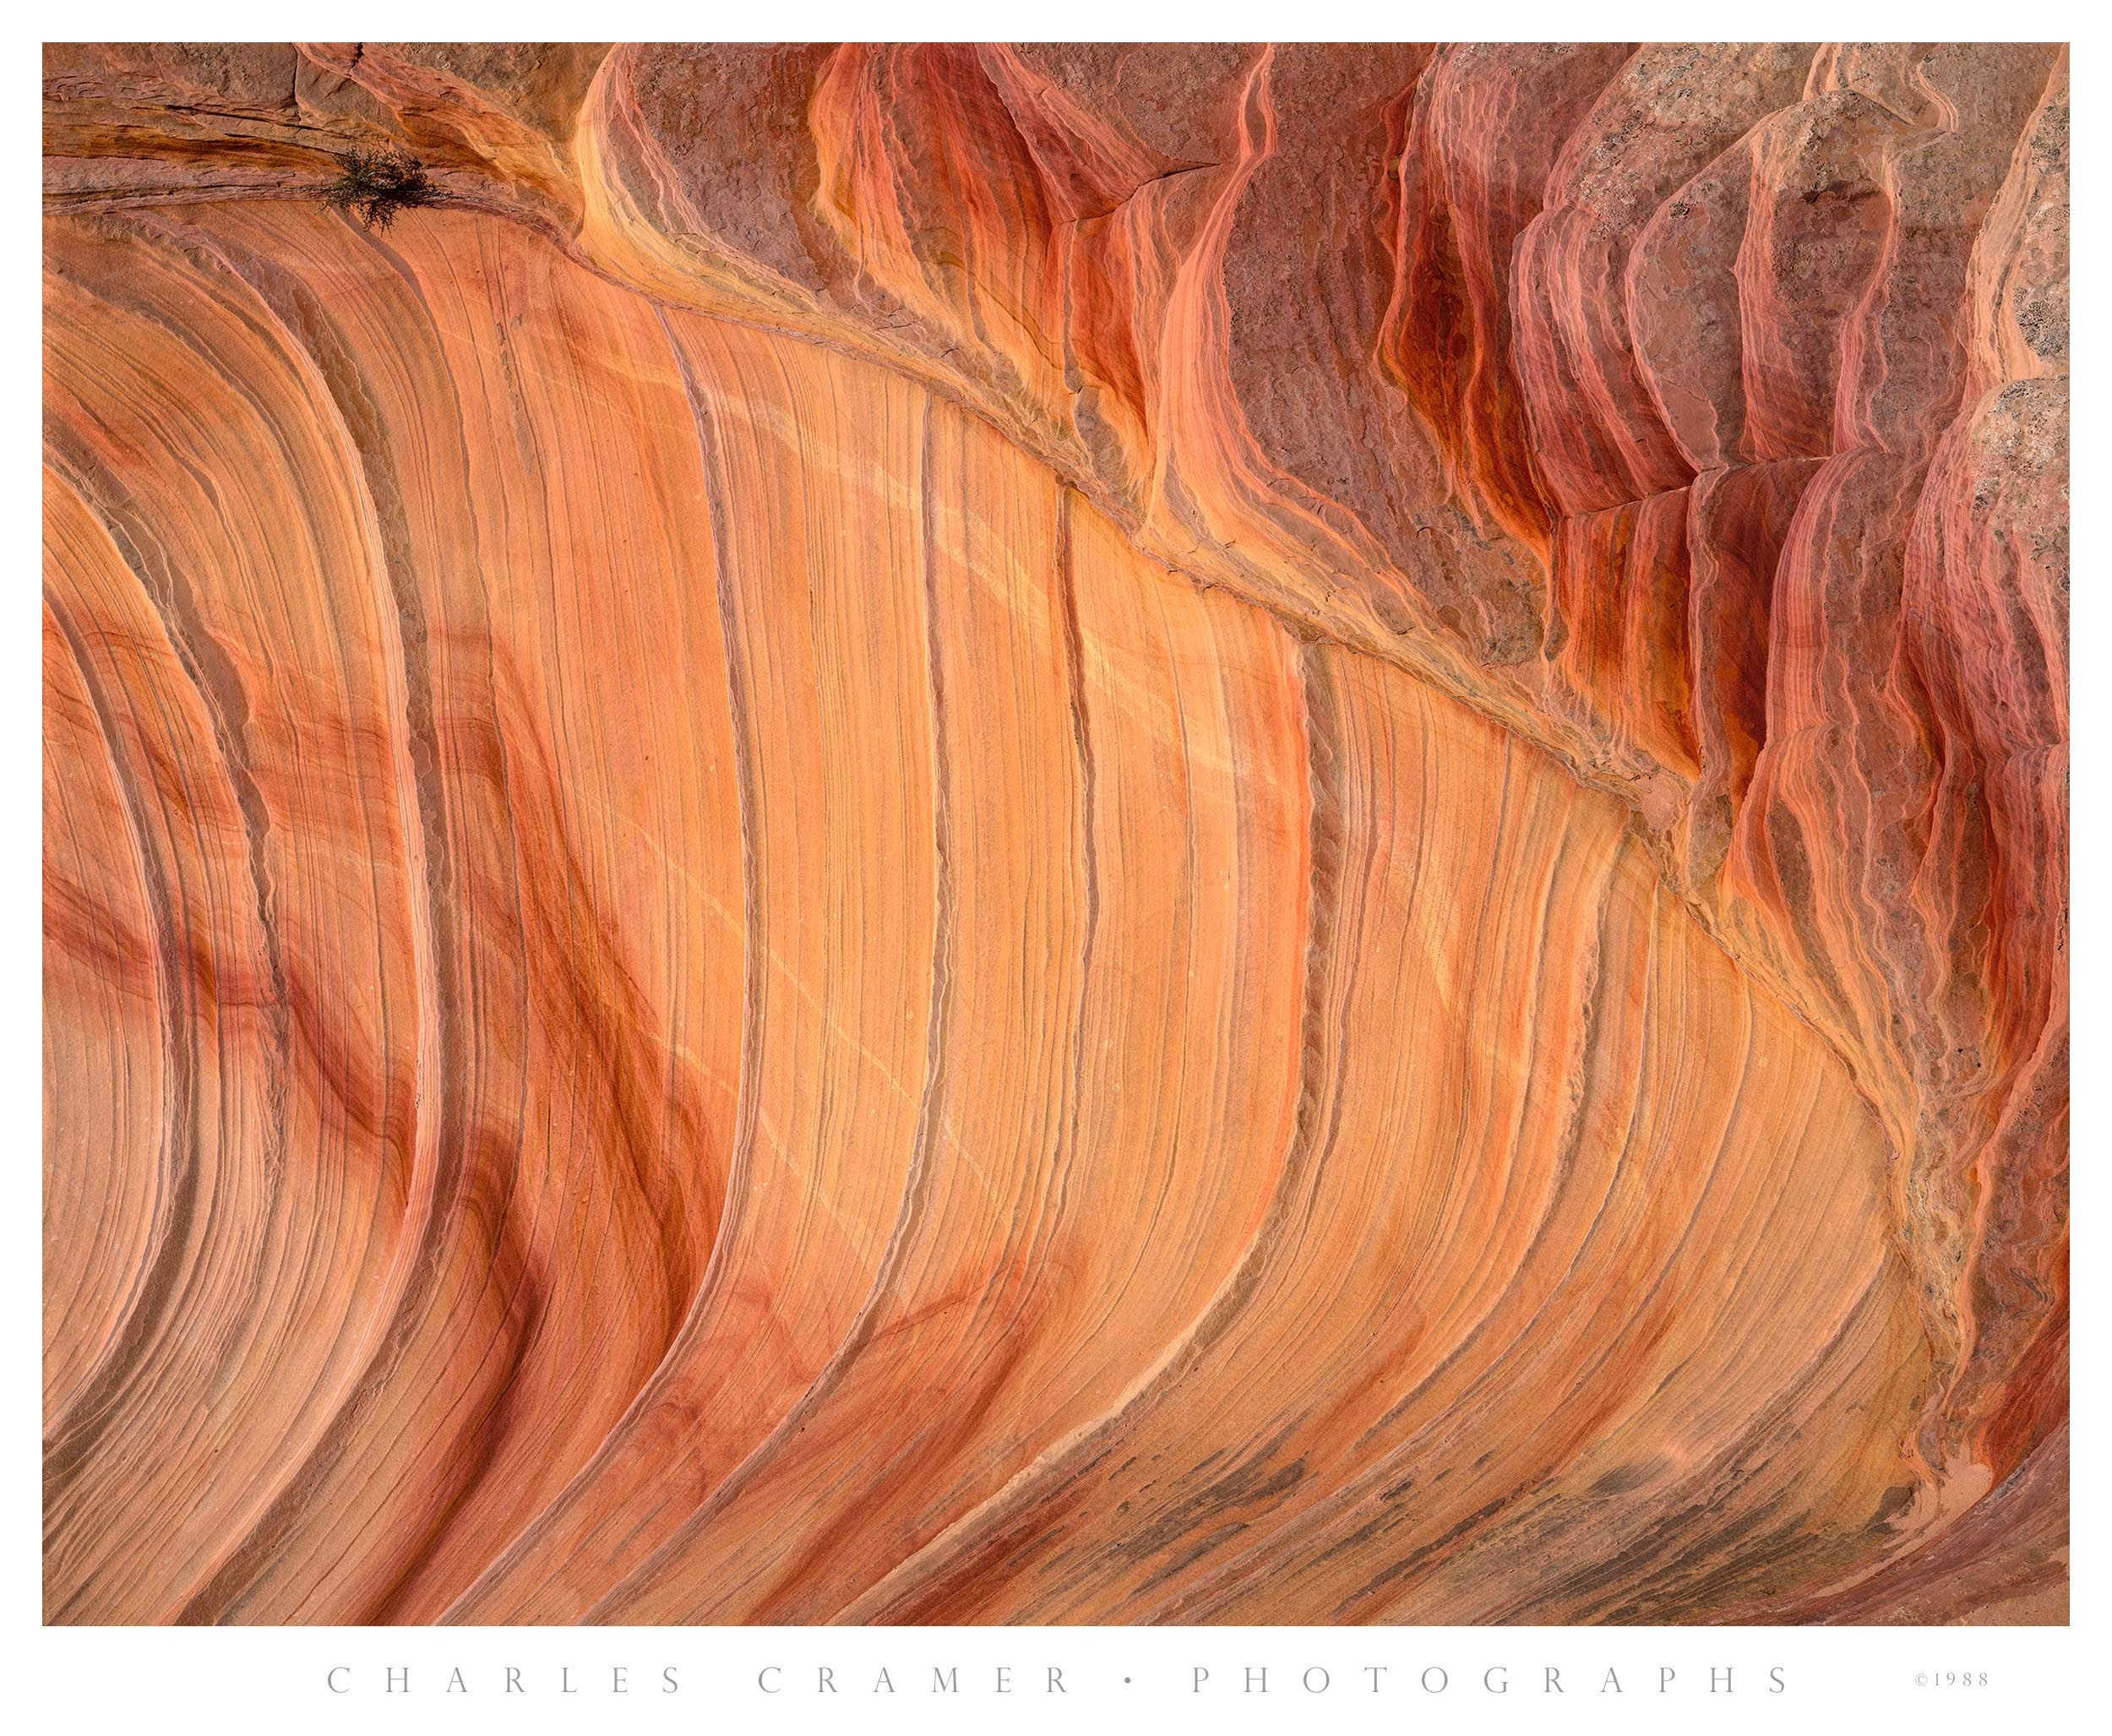 Sandstone Swirls and Streaks, Paria Wilderness, Utah